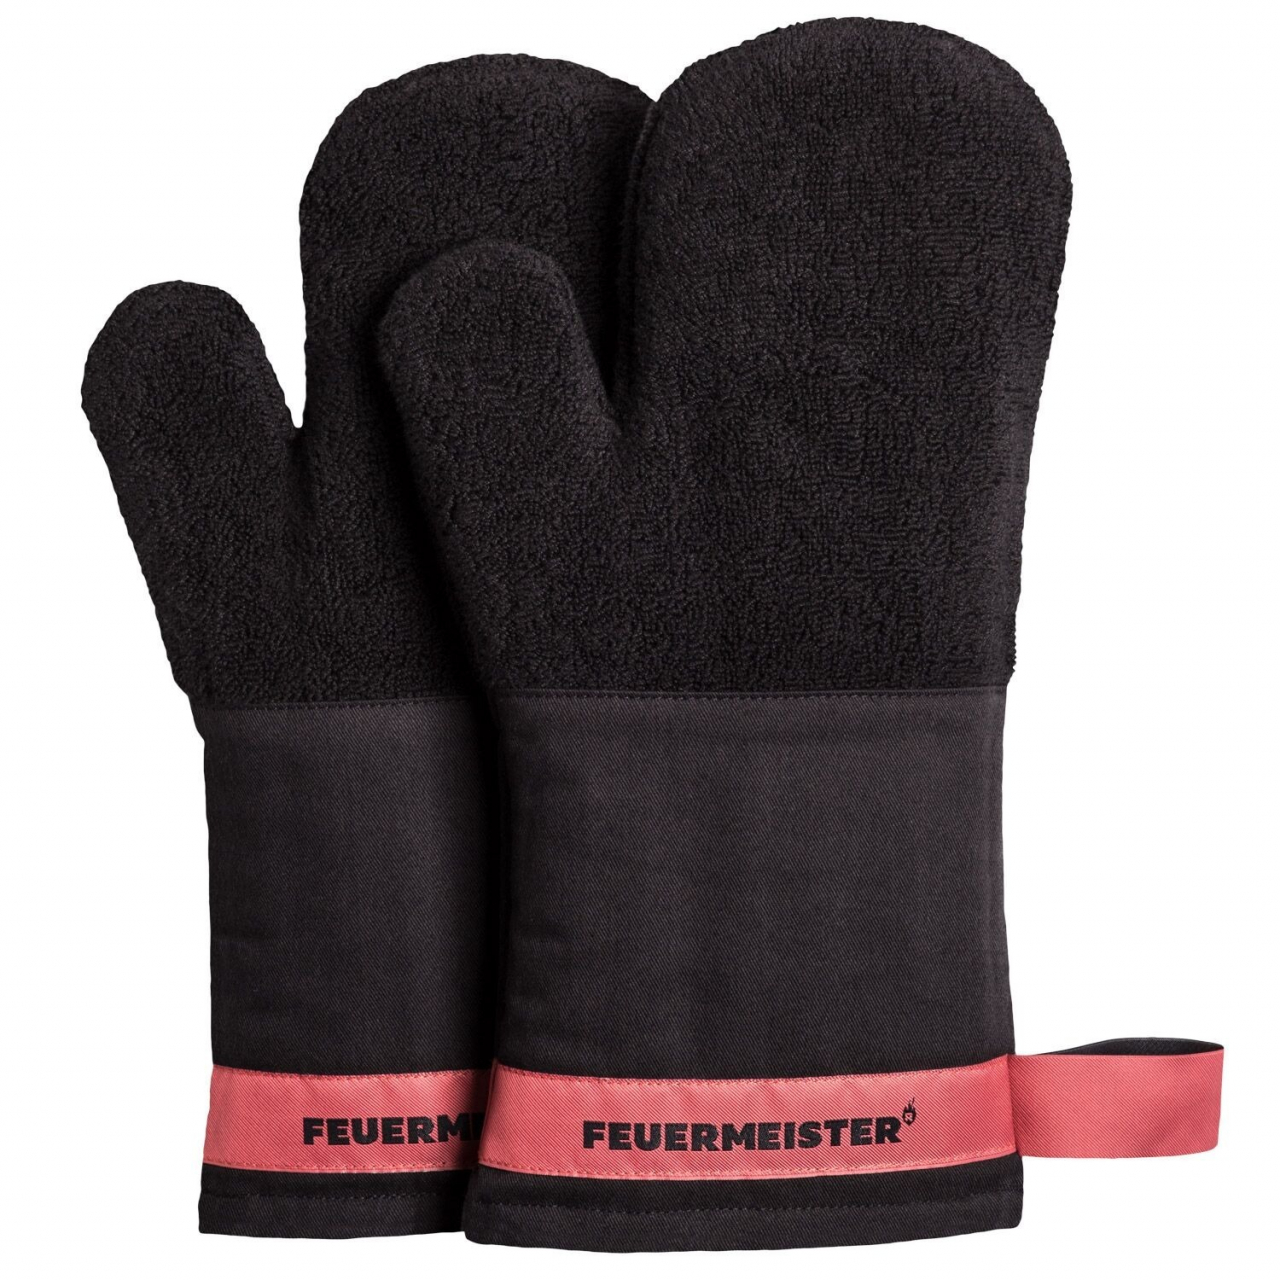 Kuchyňské rukavice Feuermeister Premium - černé, 10